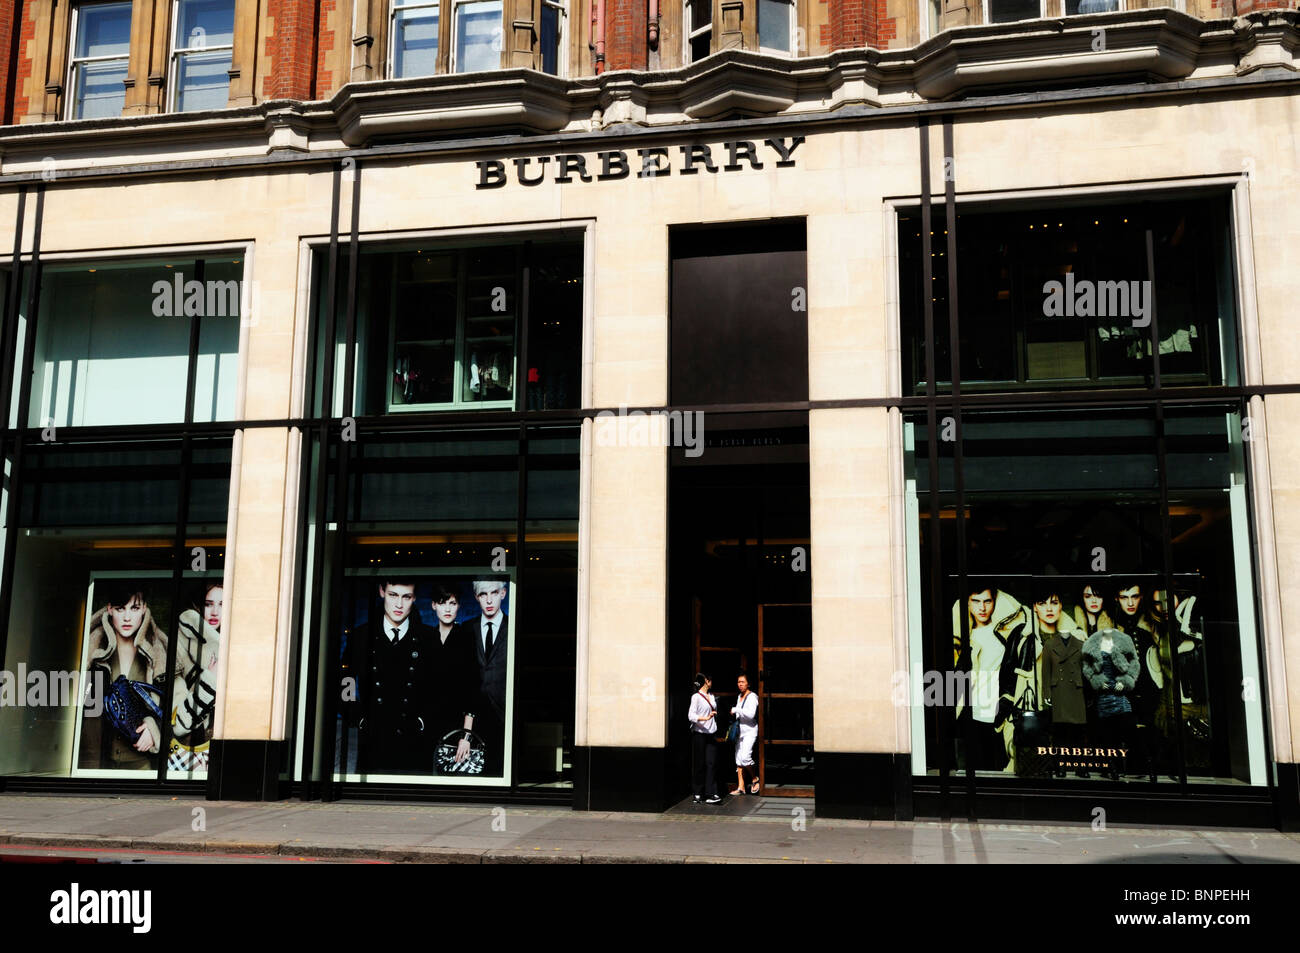 Burberry fashion clothing shop, Brompton Road, Knightsbridge, London, England, UK Stock Photo